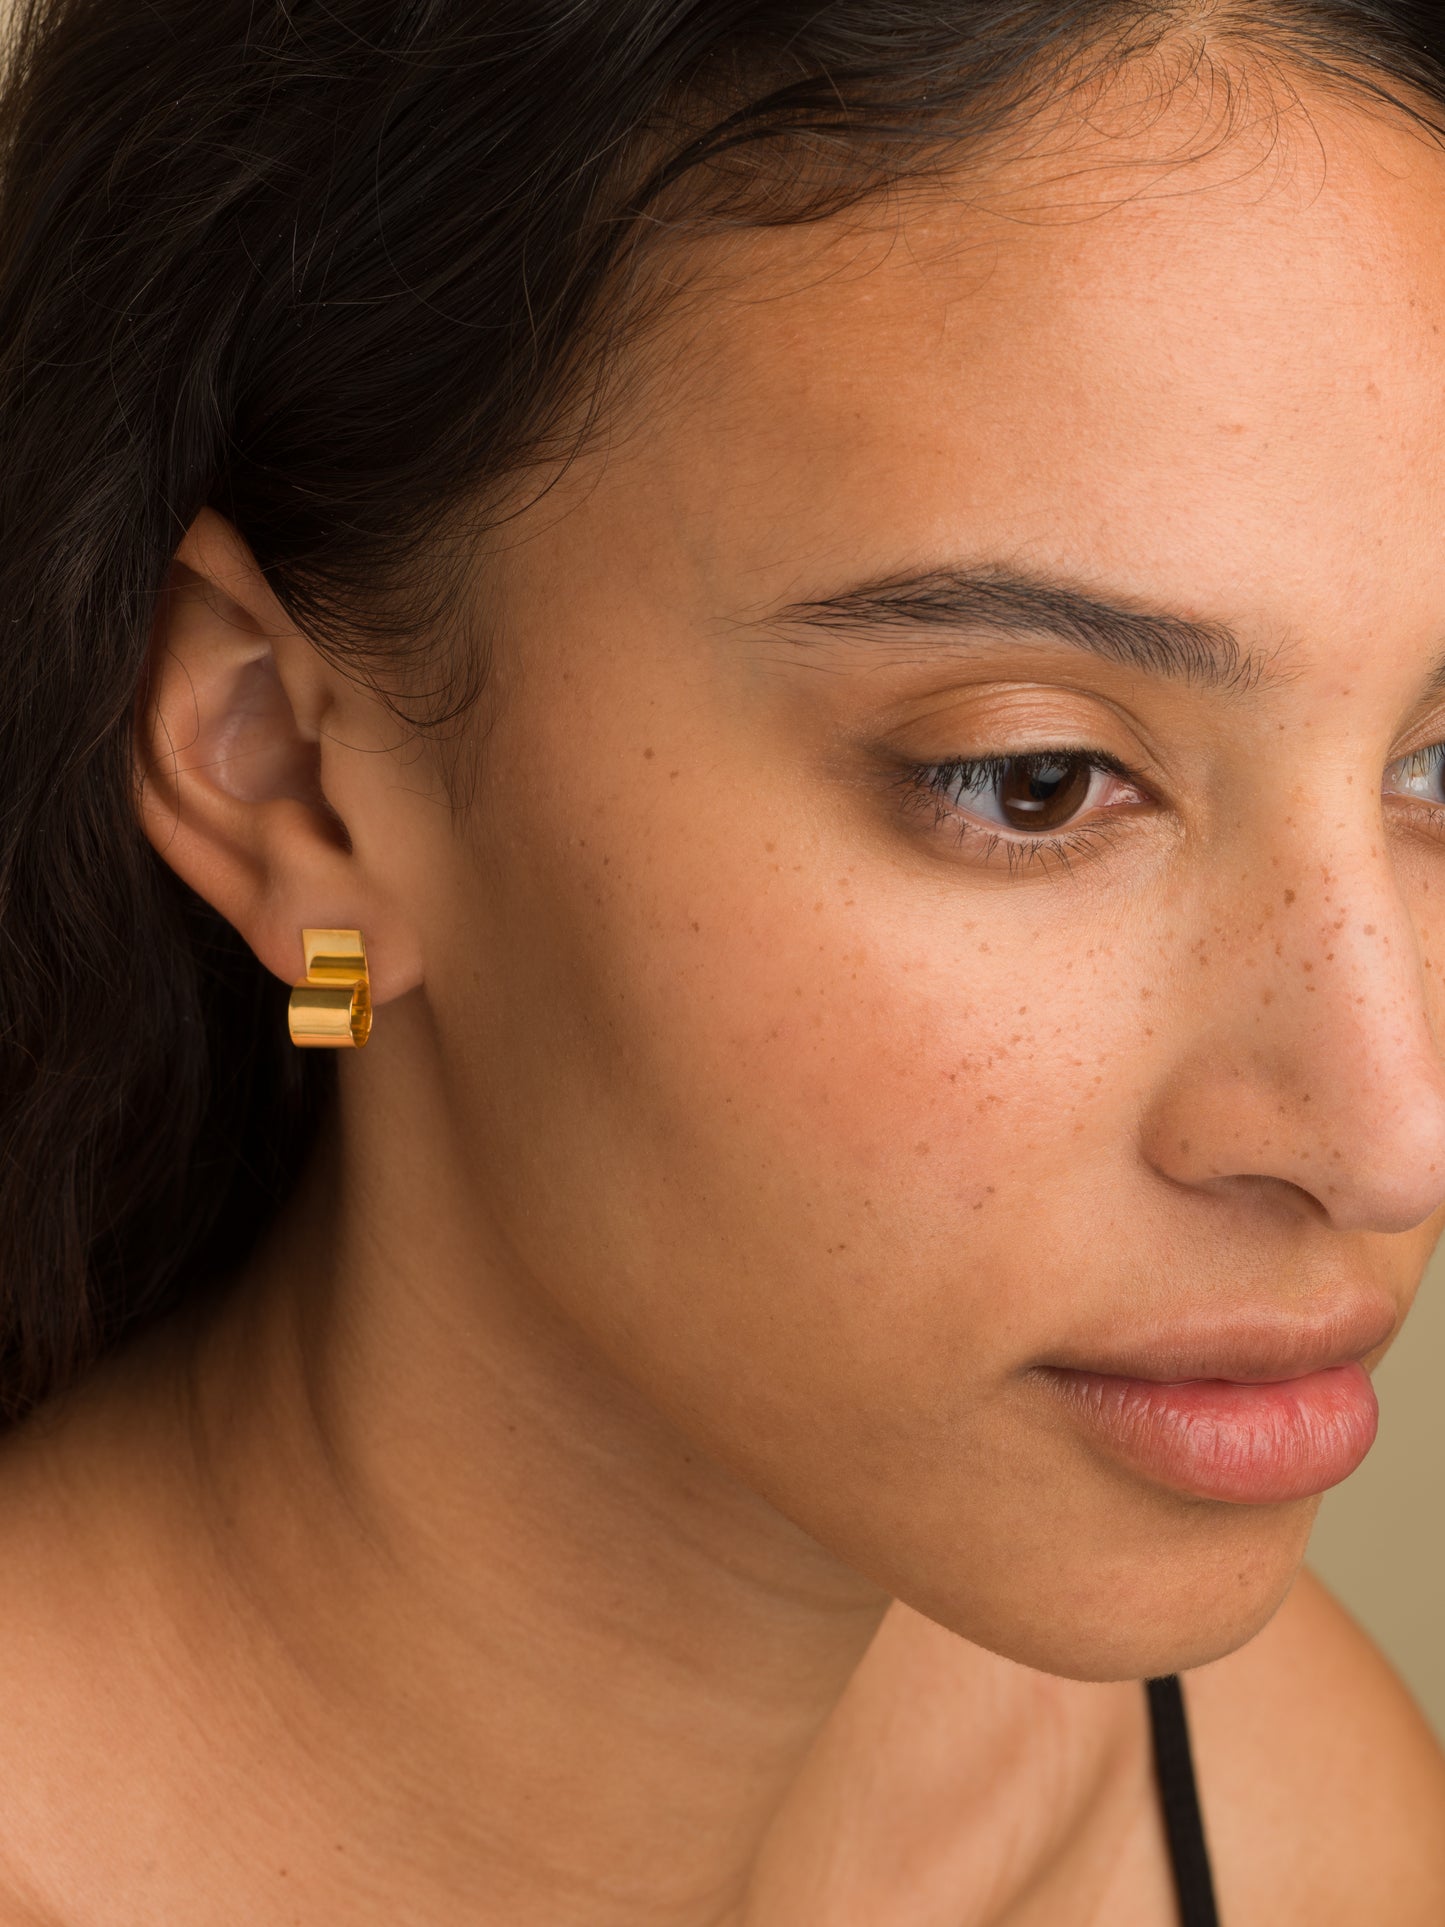 Cut Earrings Gold Vermeil by Sara Robertsson Jewellery